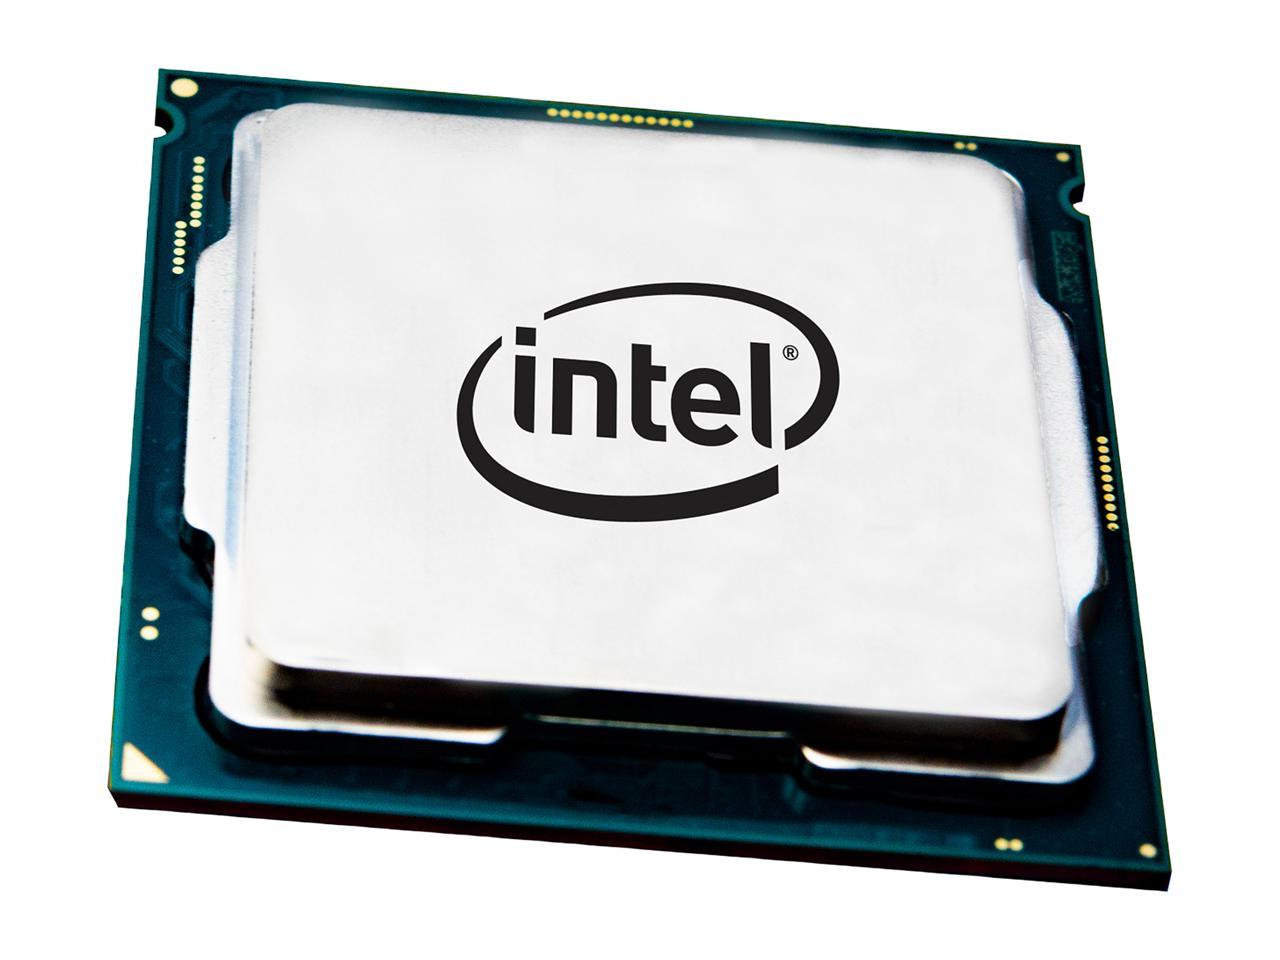 Intel Core i5-9400 Coffee Lake 6-Core 2.9 GHz (4.1 GHz Turbo) LGA 1151 (300 Series) 65W BX80684I59400 Desktop Processor Intel UHD Graphics 630